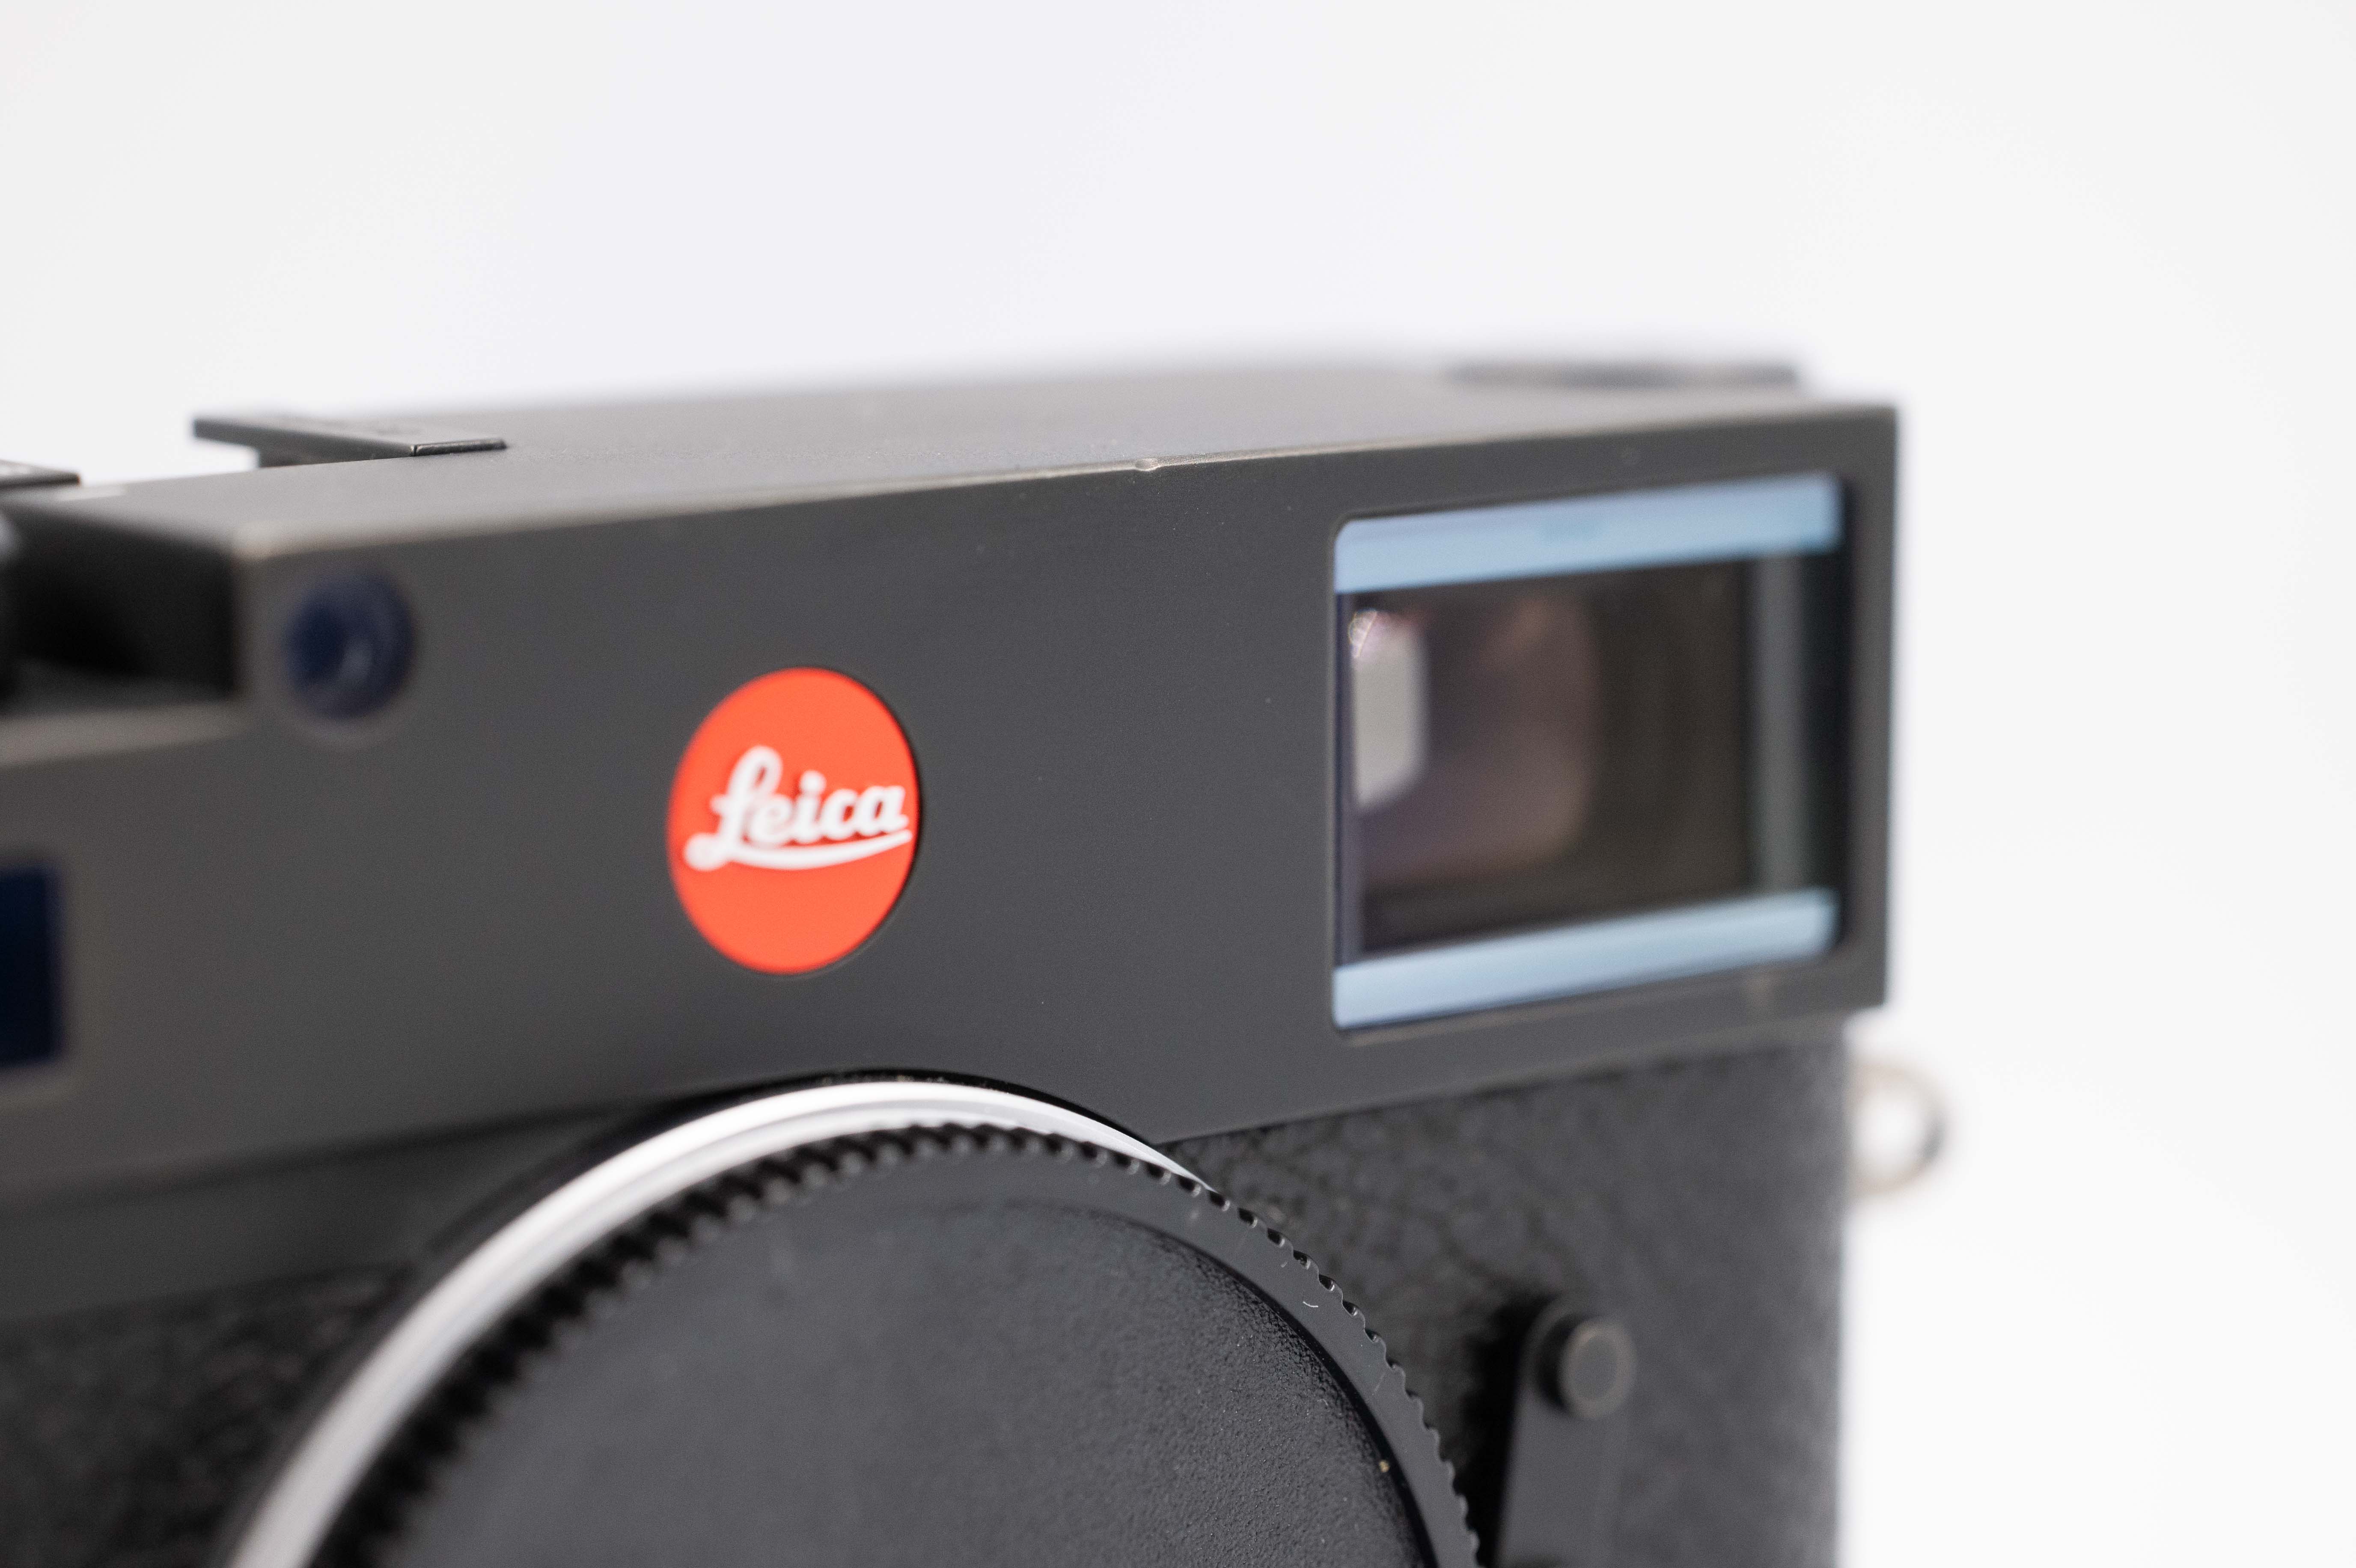 Leica M10-R Black 20002